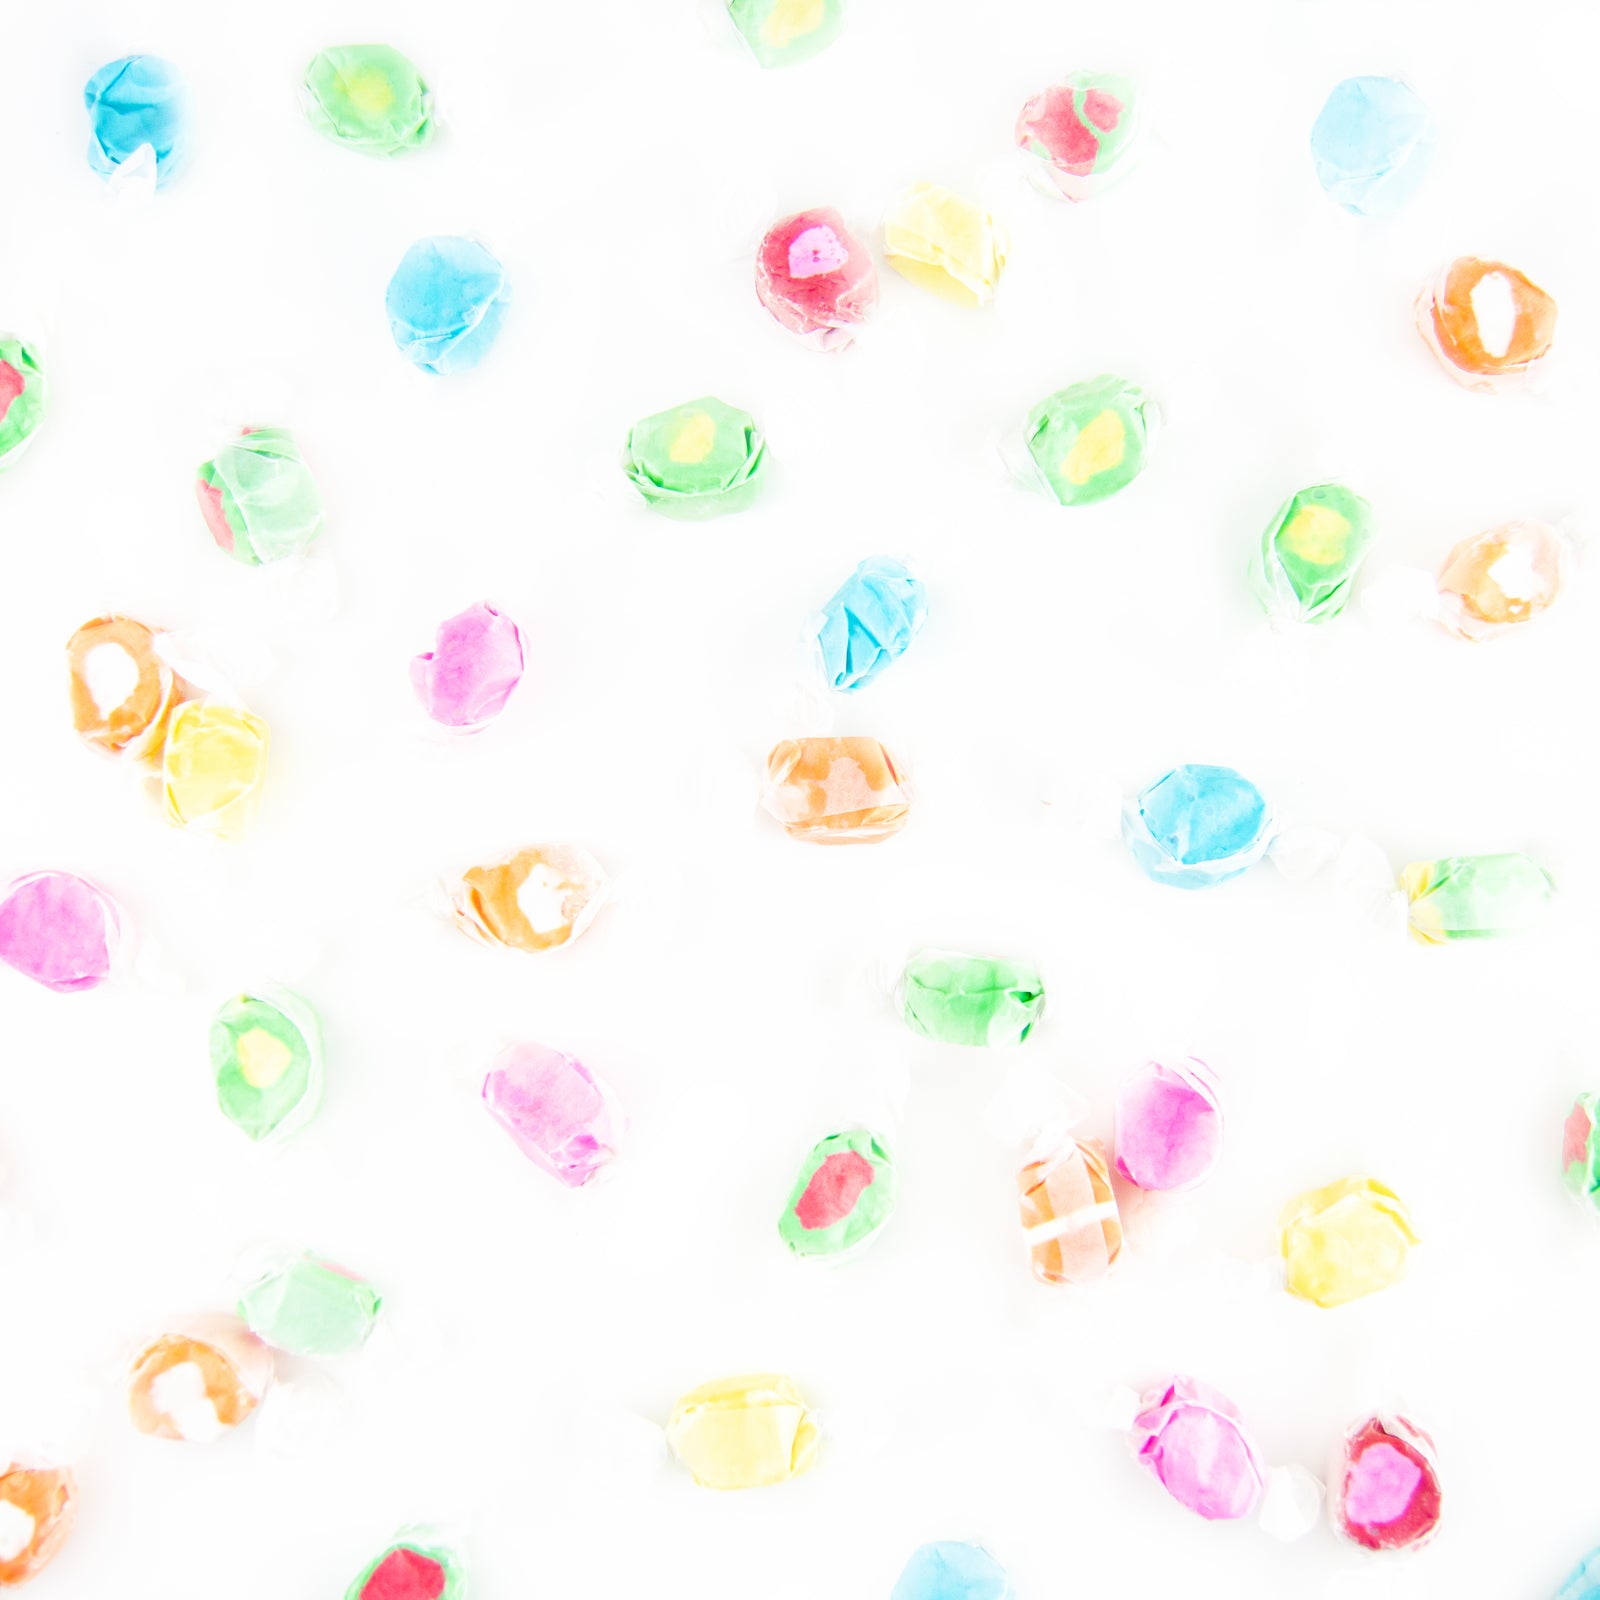 Sweet Candy Company - Buy Candy Online - Bulk Taffy, Chocolate Sticks